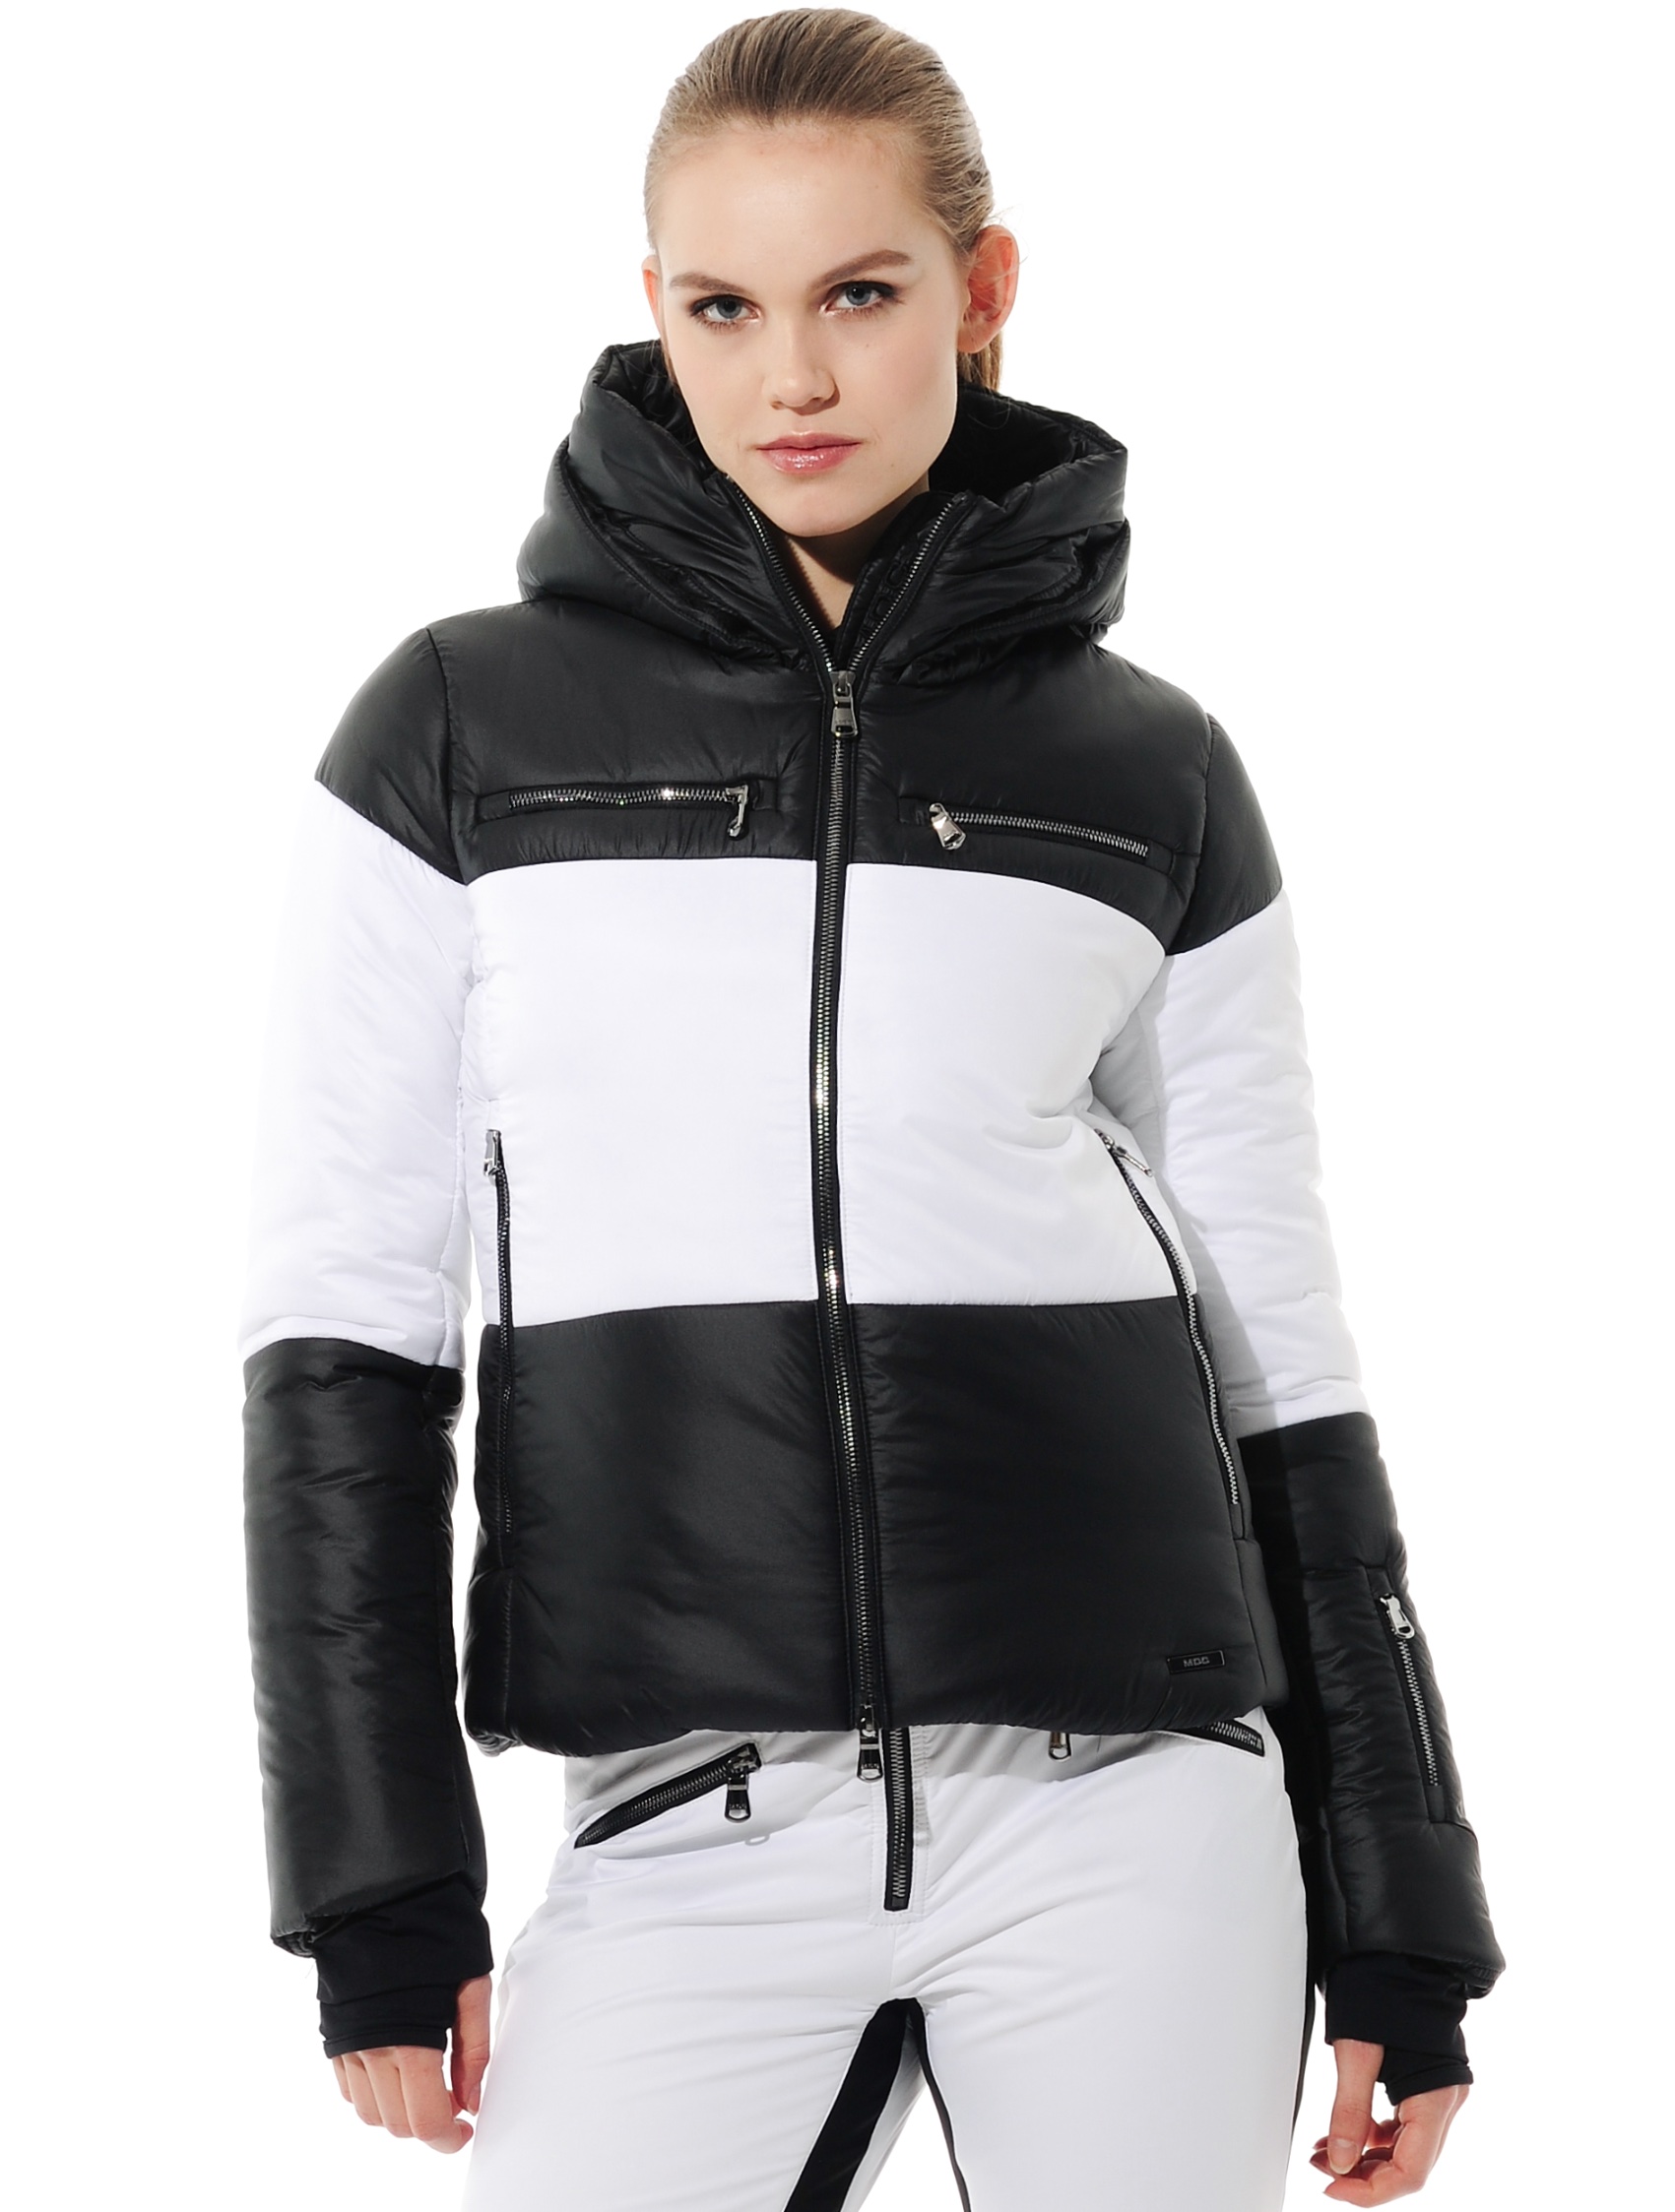 ski jacket black/white 